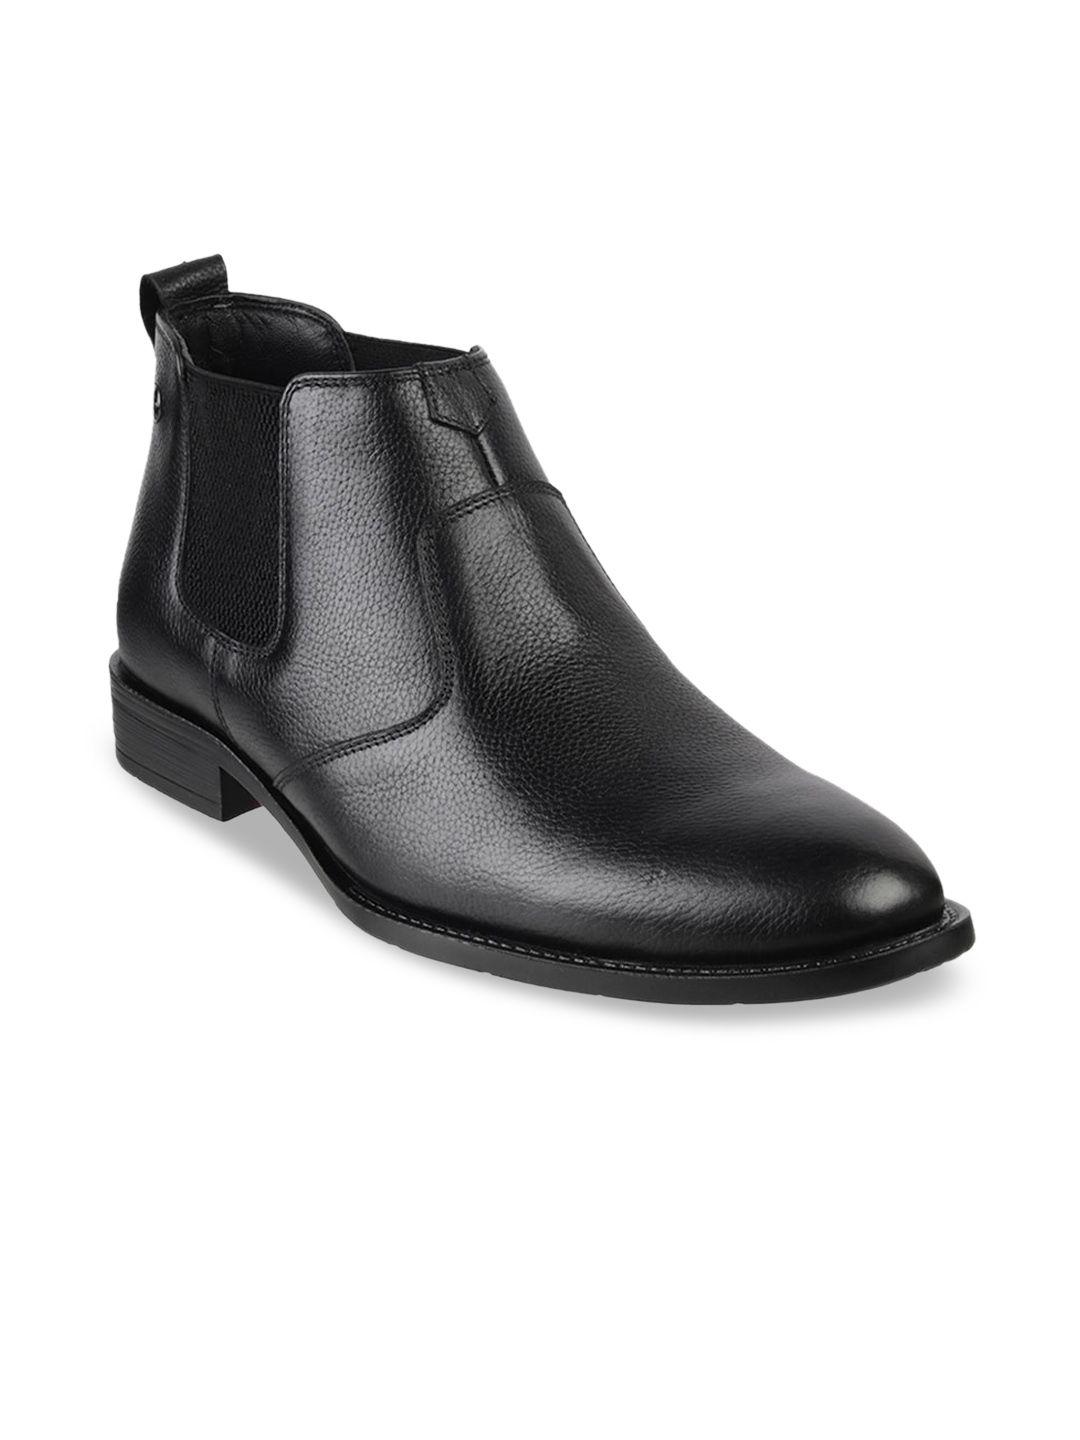 mochi-men-black-solid-leather-boots